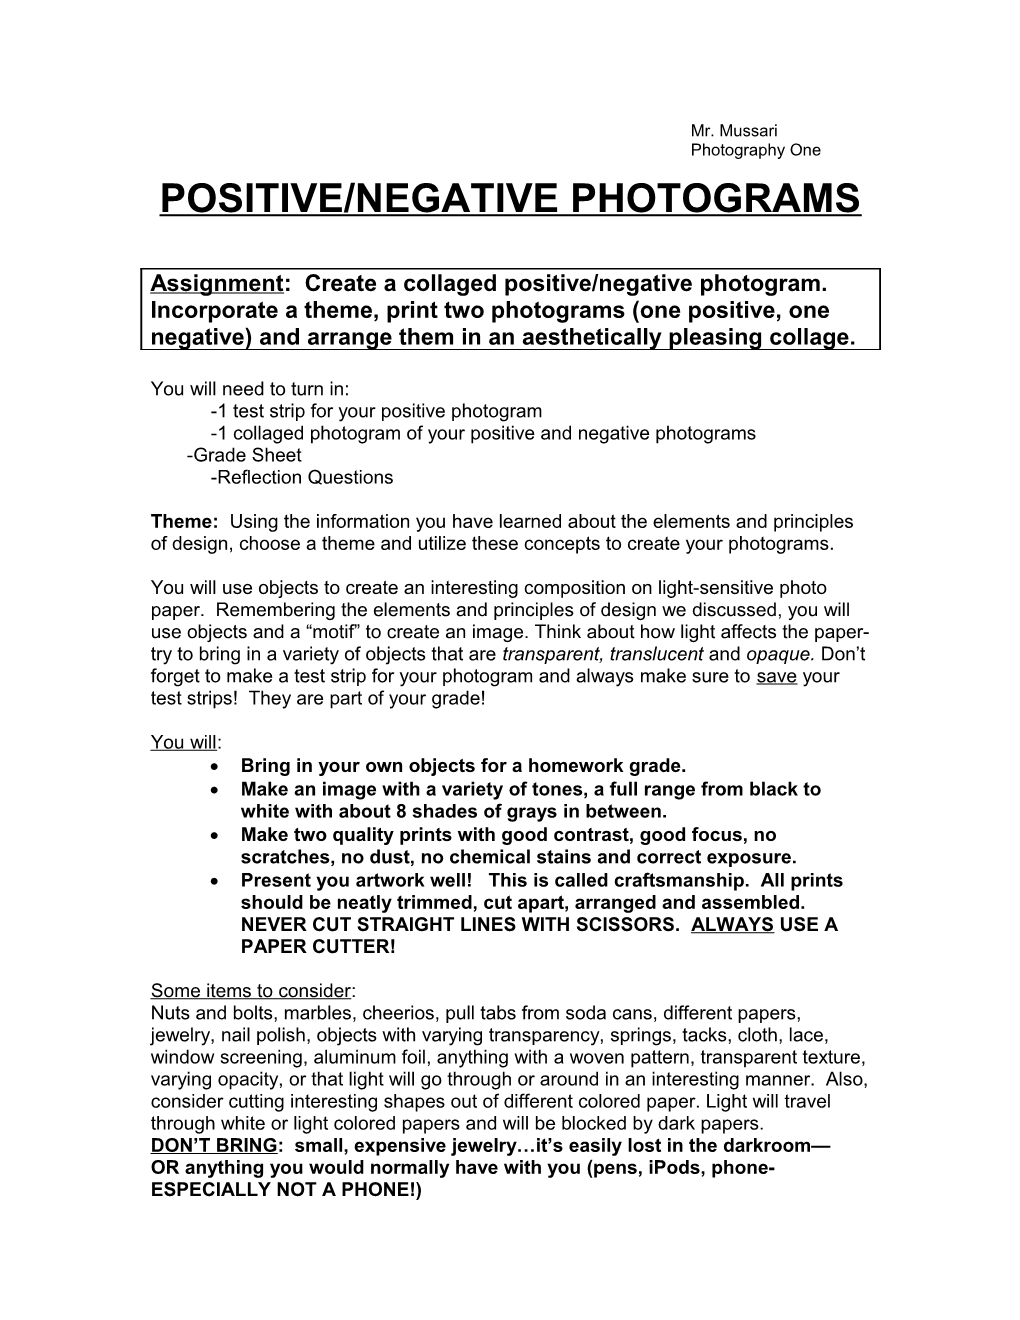 Positive/Negative Photograms